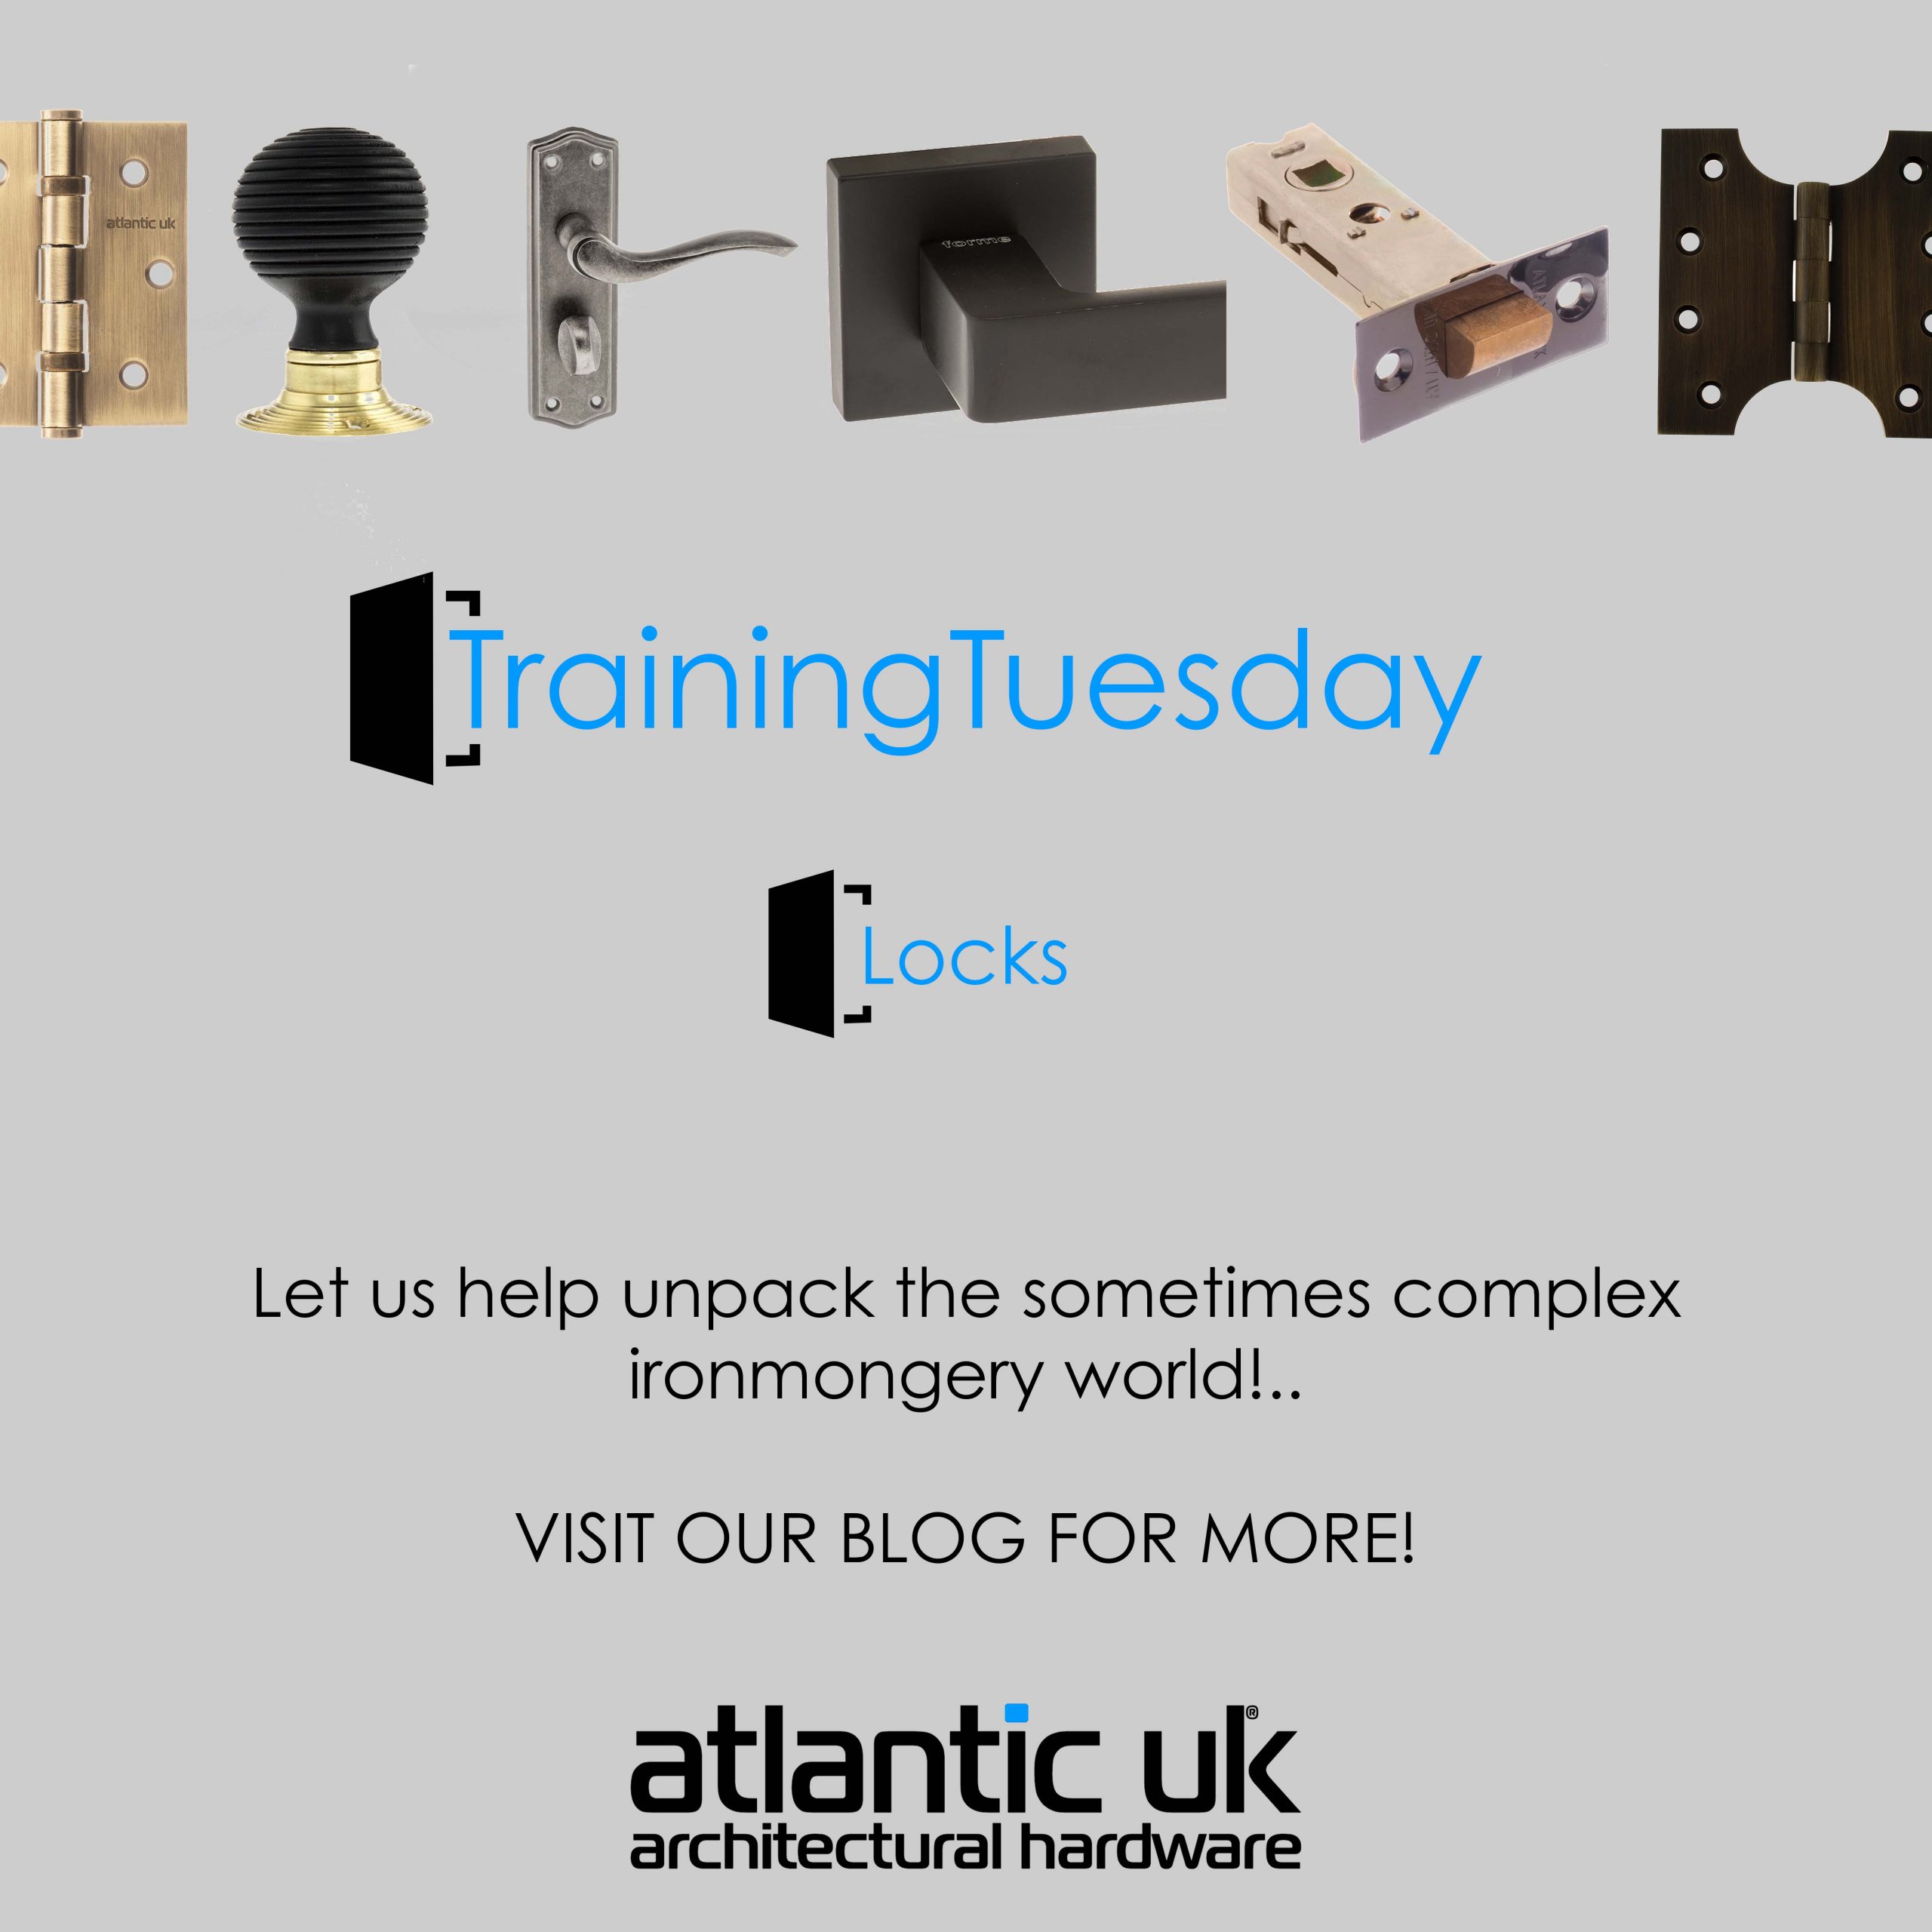 It’s #Trainingtuesday again!! Locks!